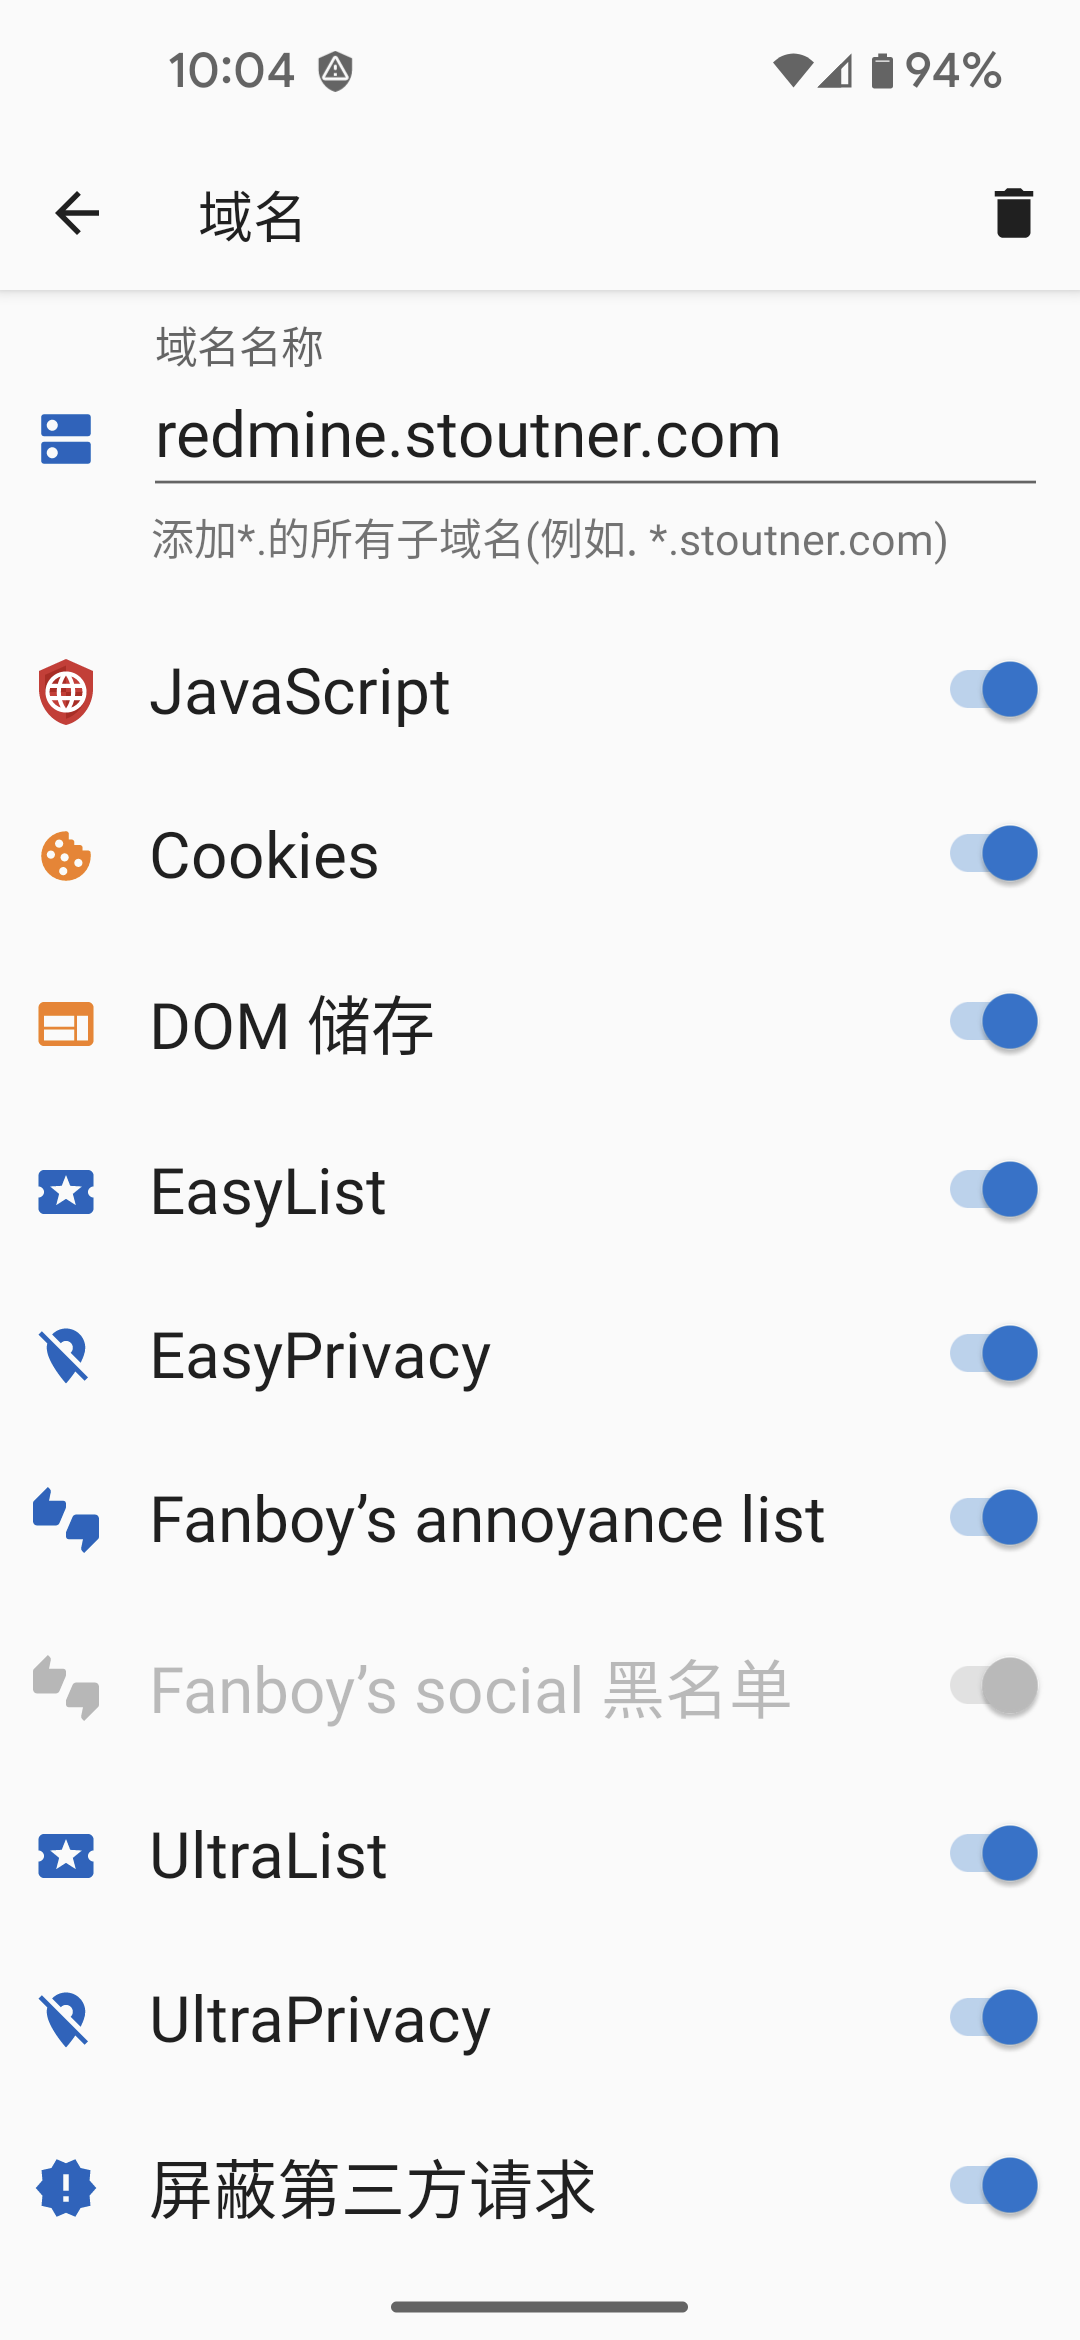 fastlane/metadata/android/zh_CN/images/phoneScreenshots/07-Domains.png